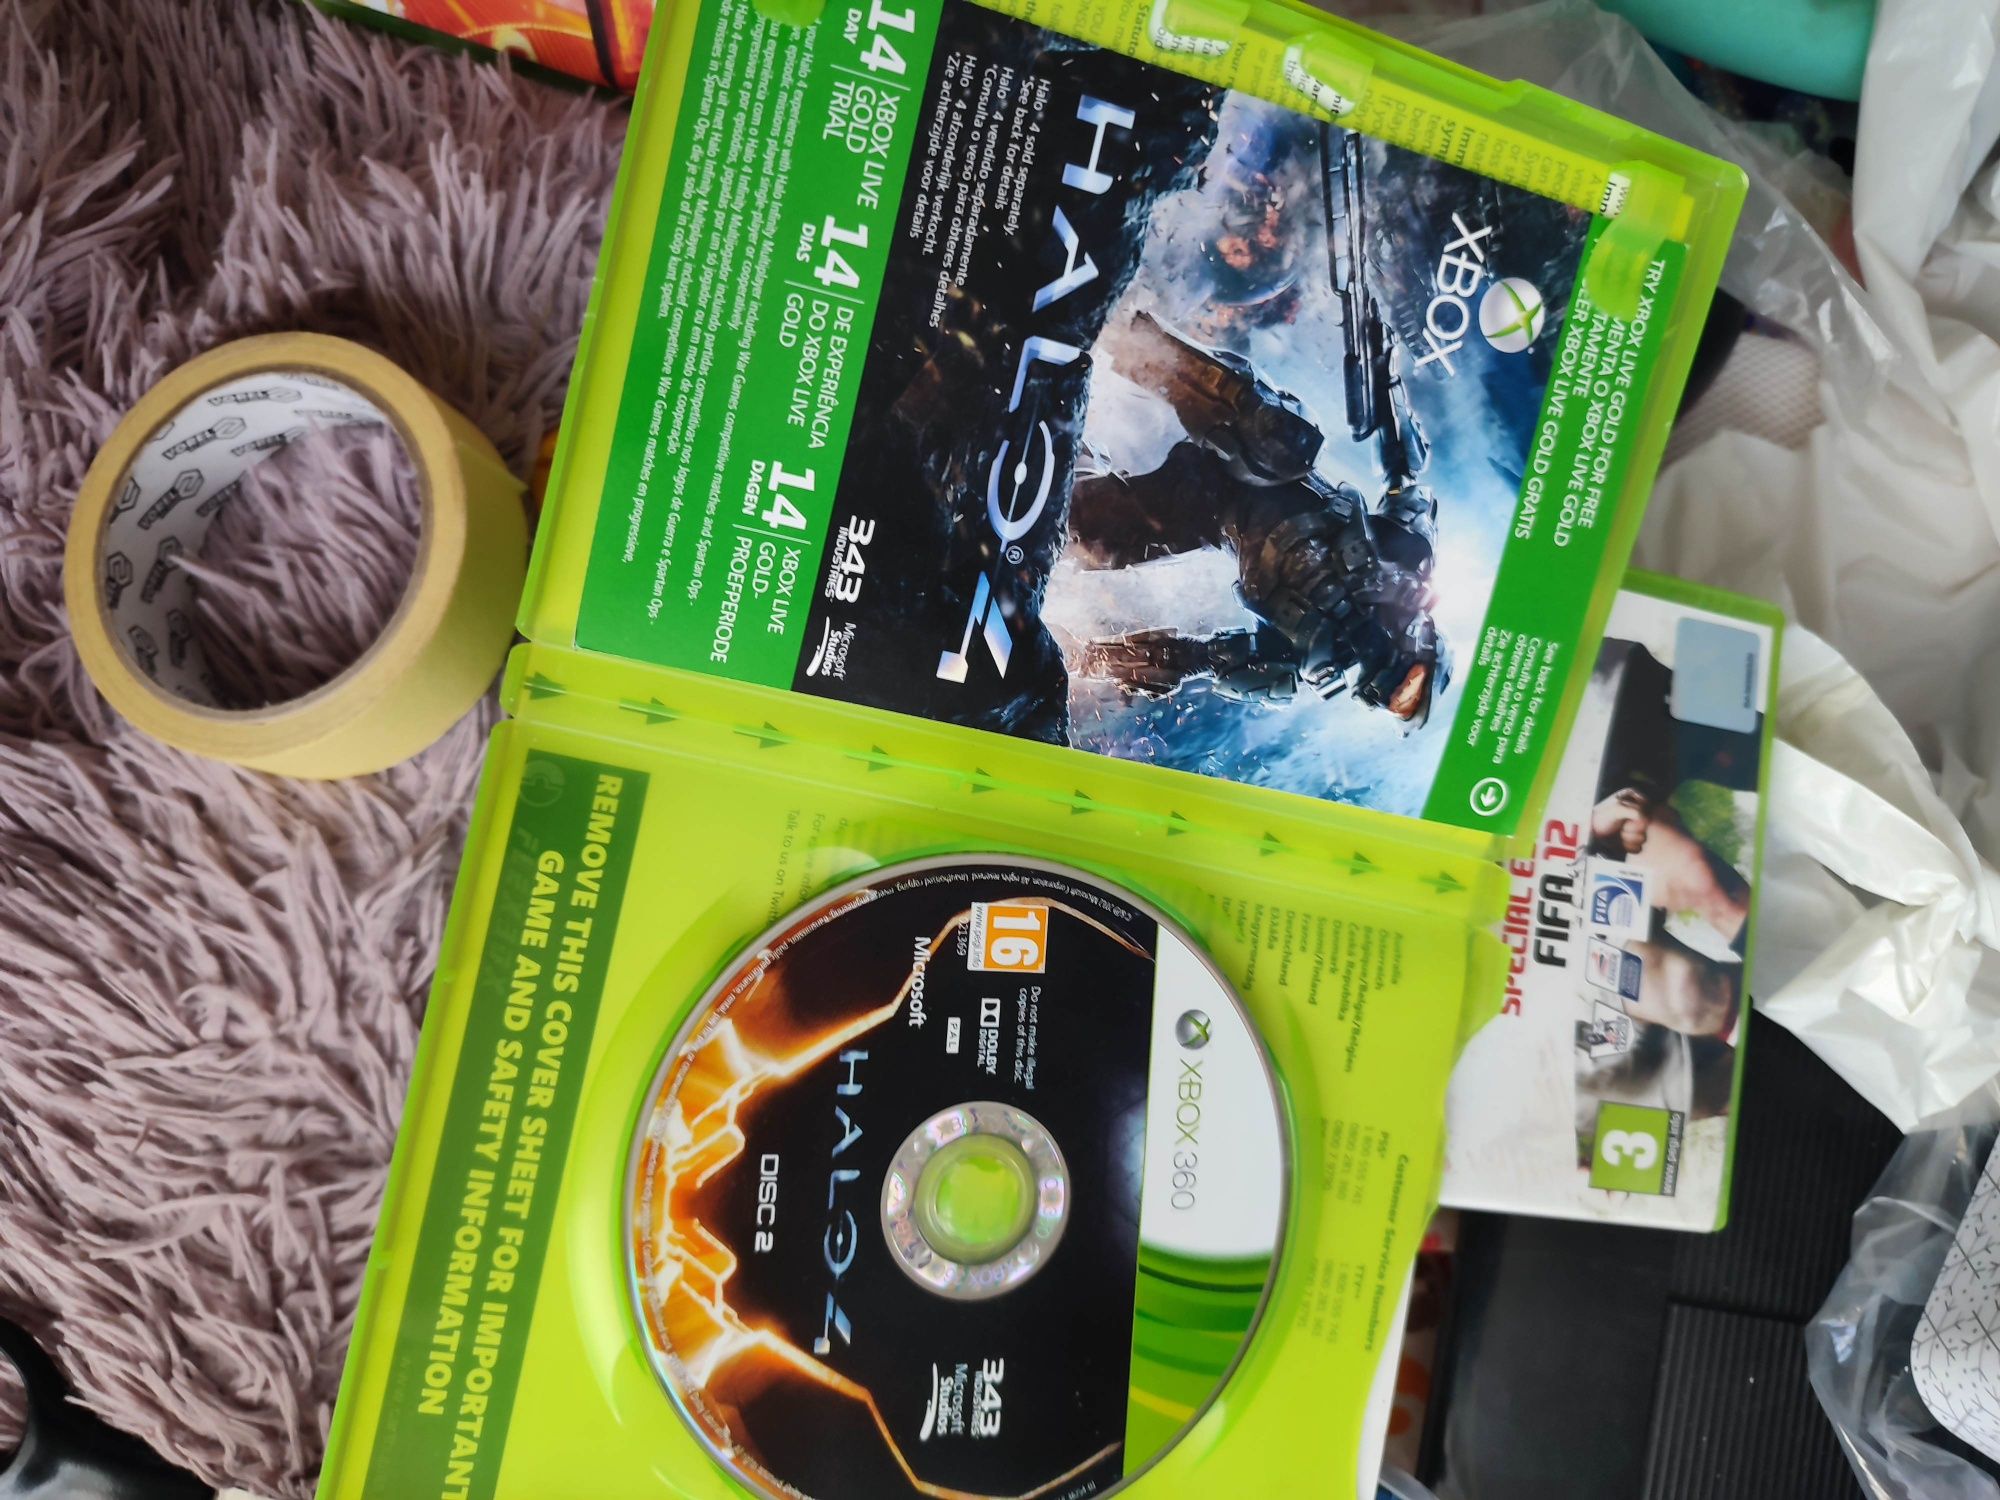 Halo 4 xbox360. Xbox 360. X360